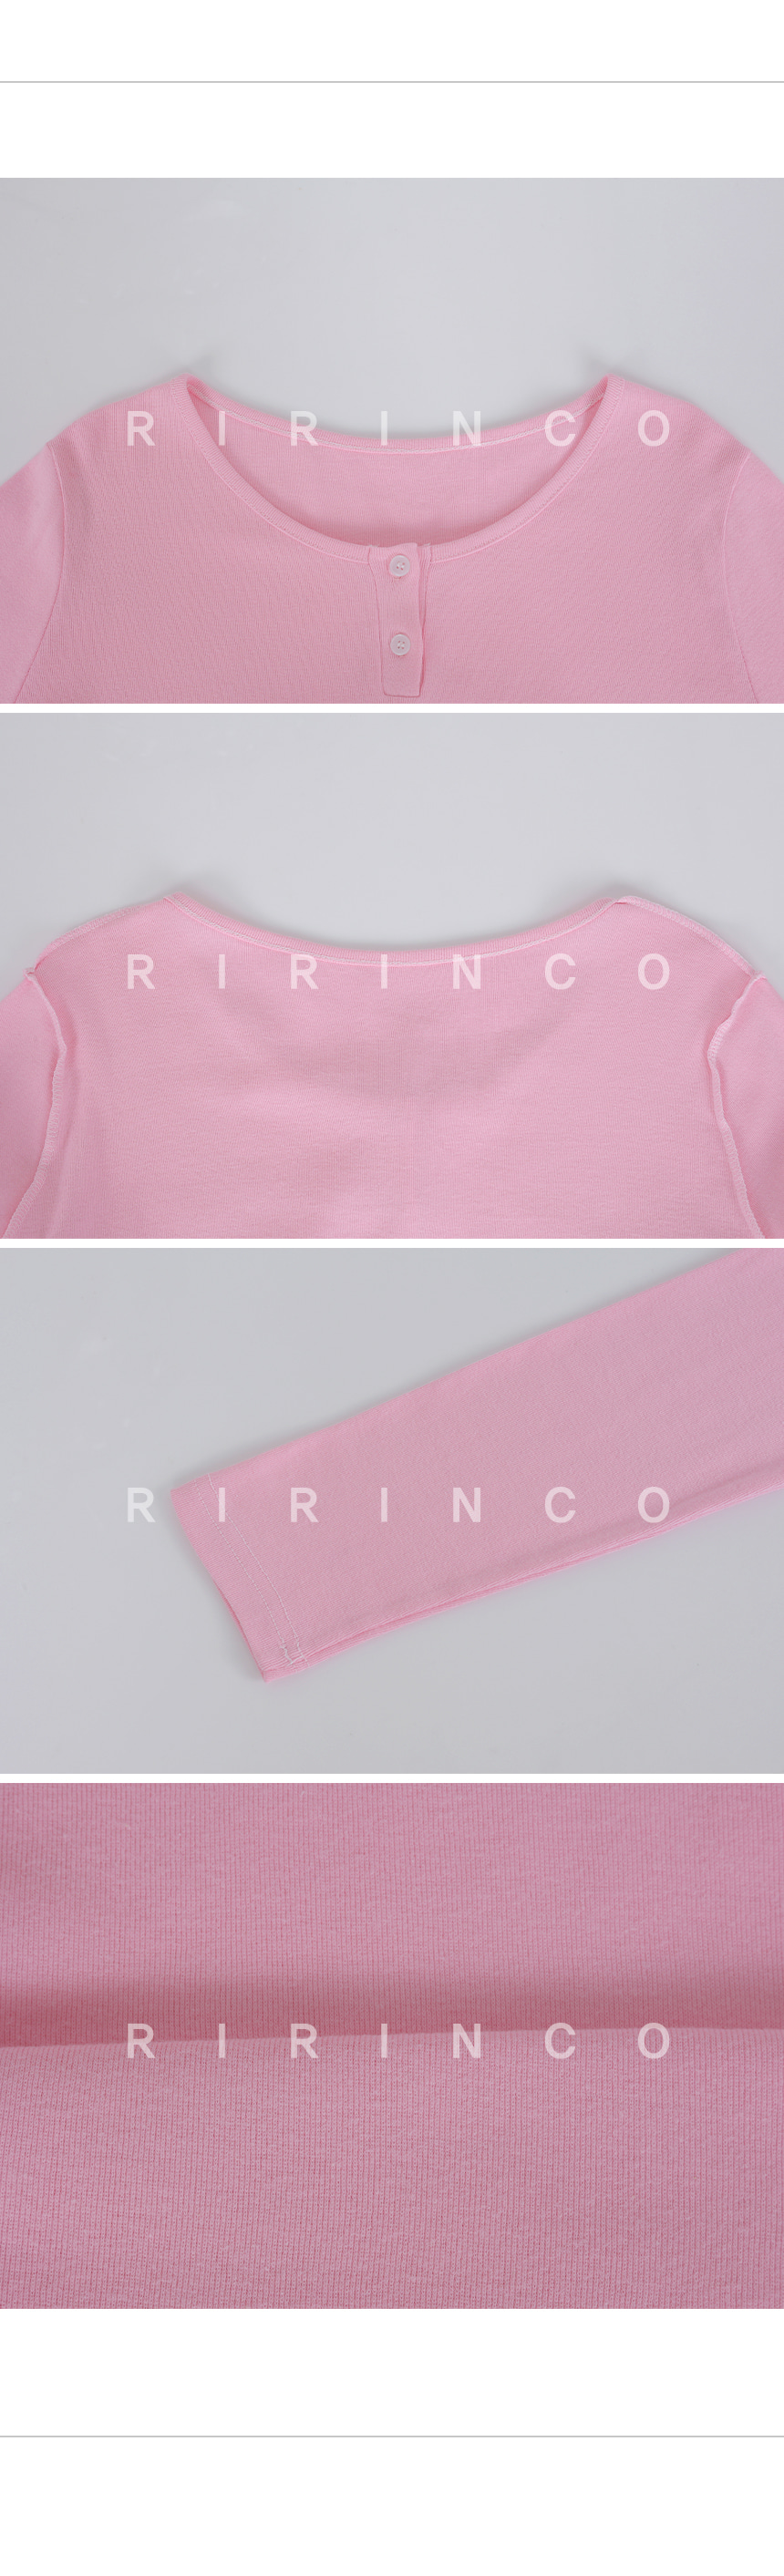 RIRINCO セミクロップド丈ラウンドネックボタンTシャツ